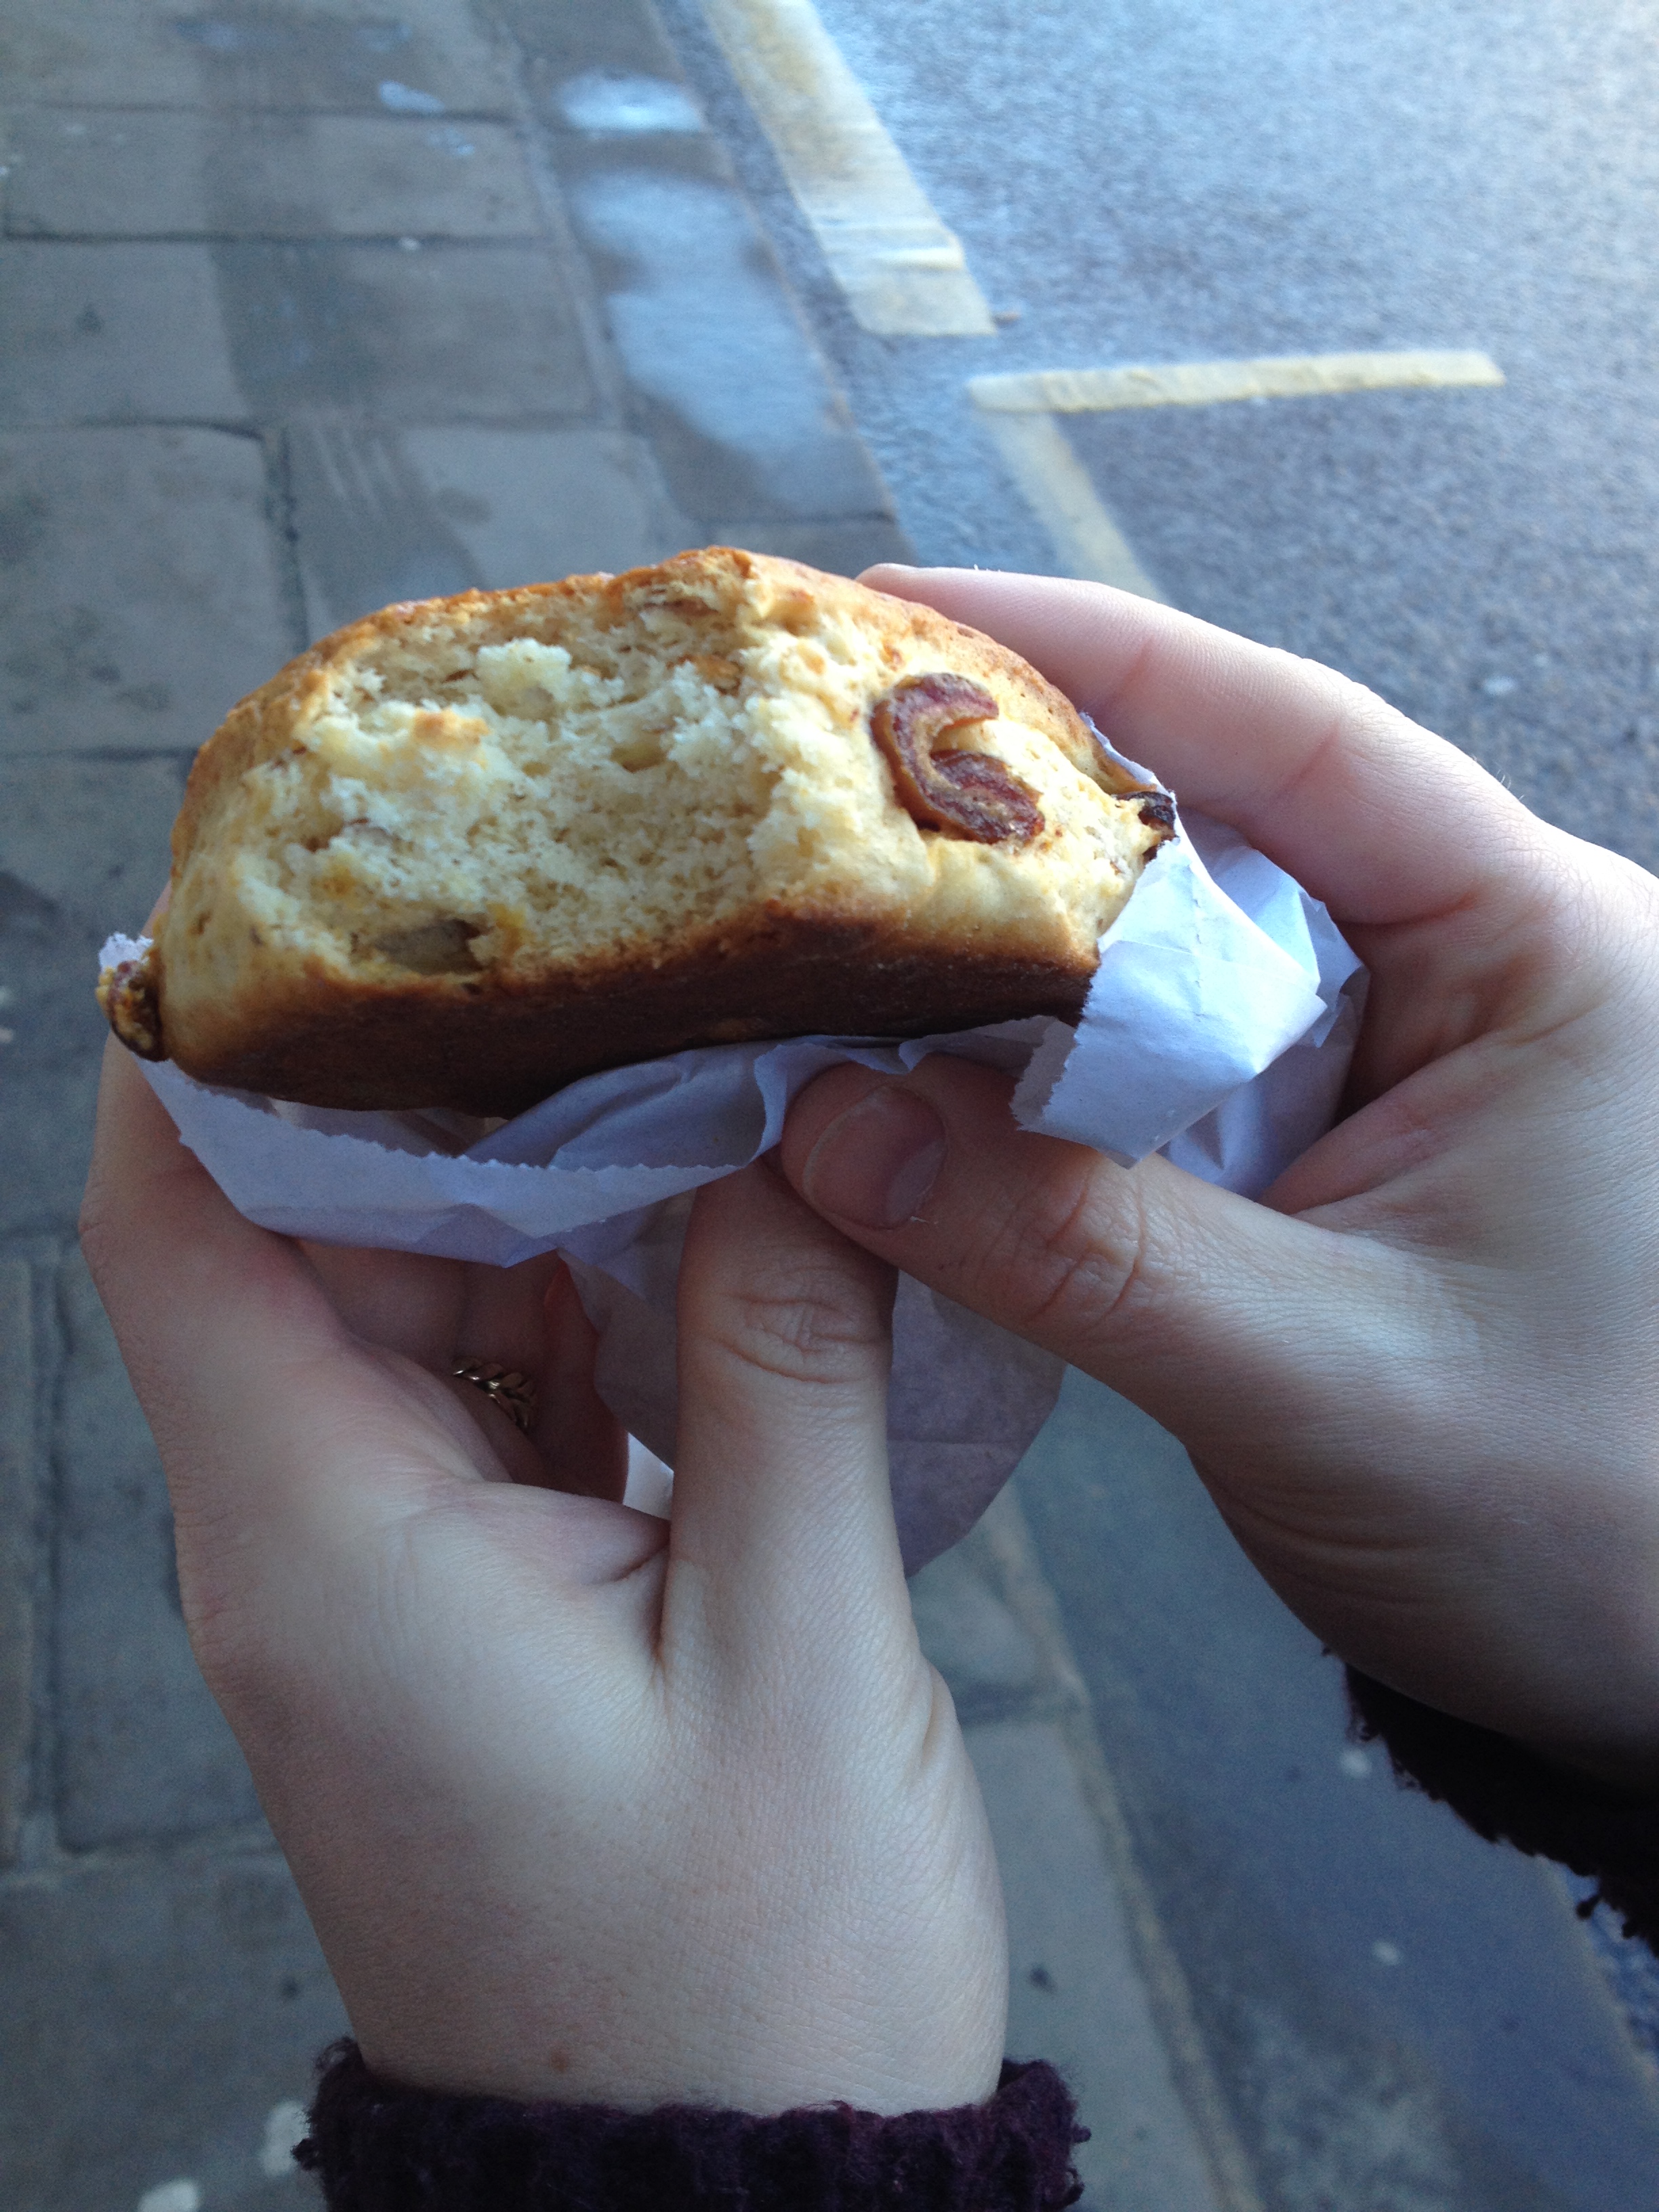 Date scone from Artisan Bakery in Headingley